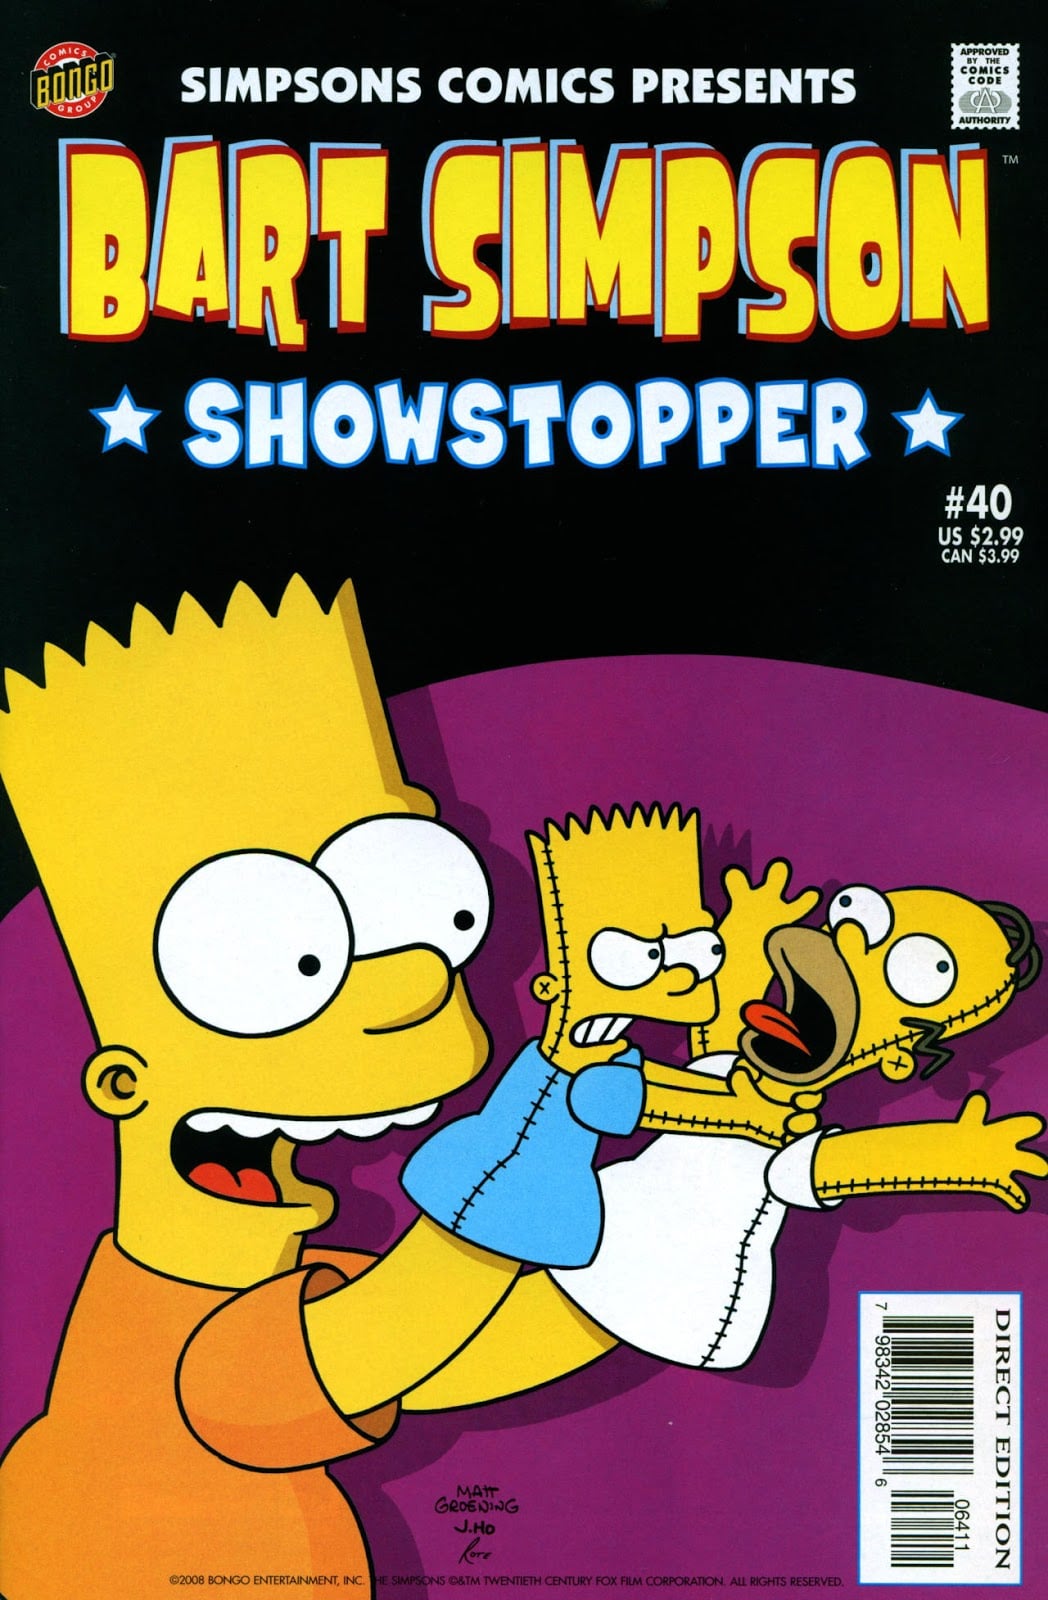 Bart simpson comic book